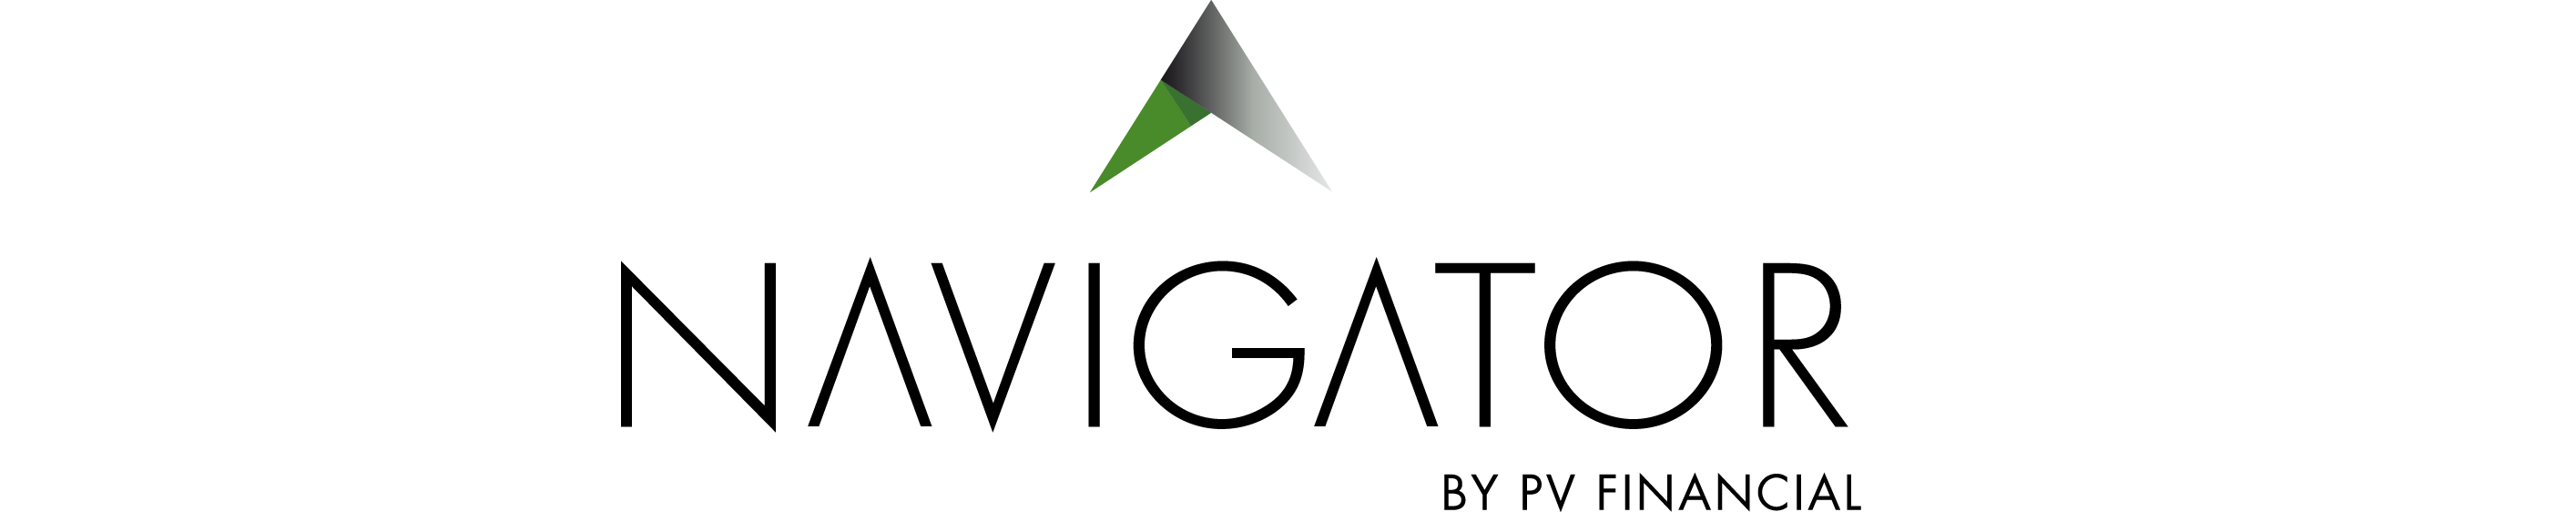 Navigator header logo - PV Navigator - Financial Advisors, Ludlow, MA